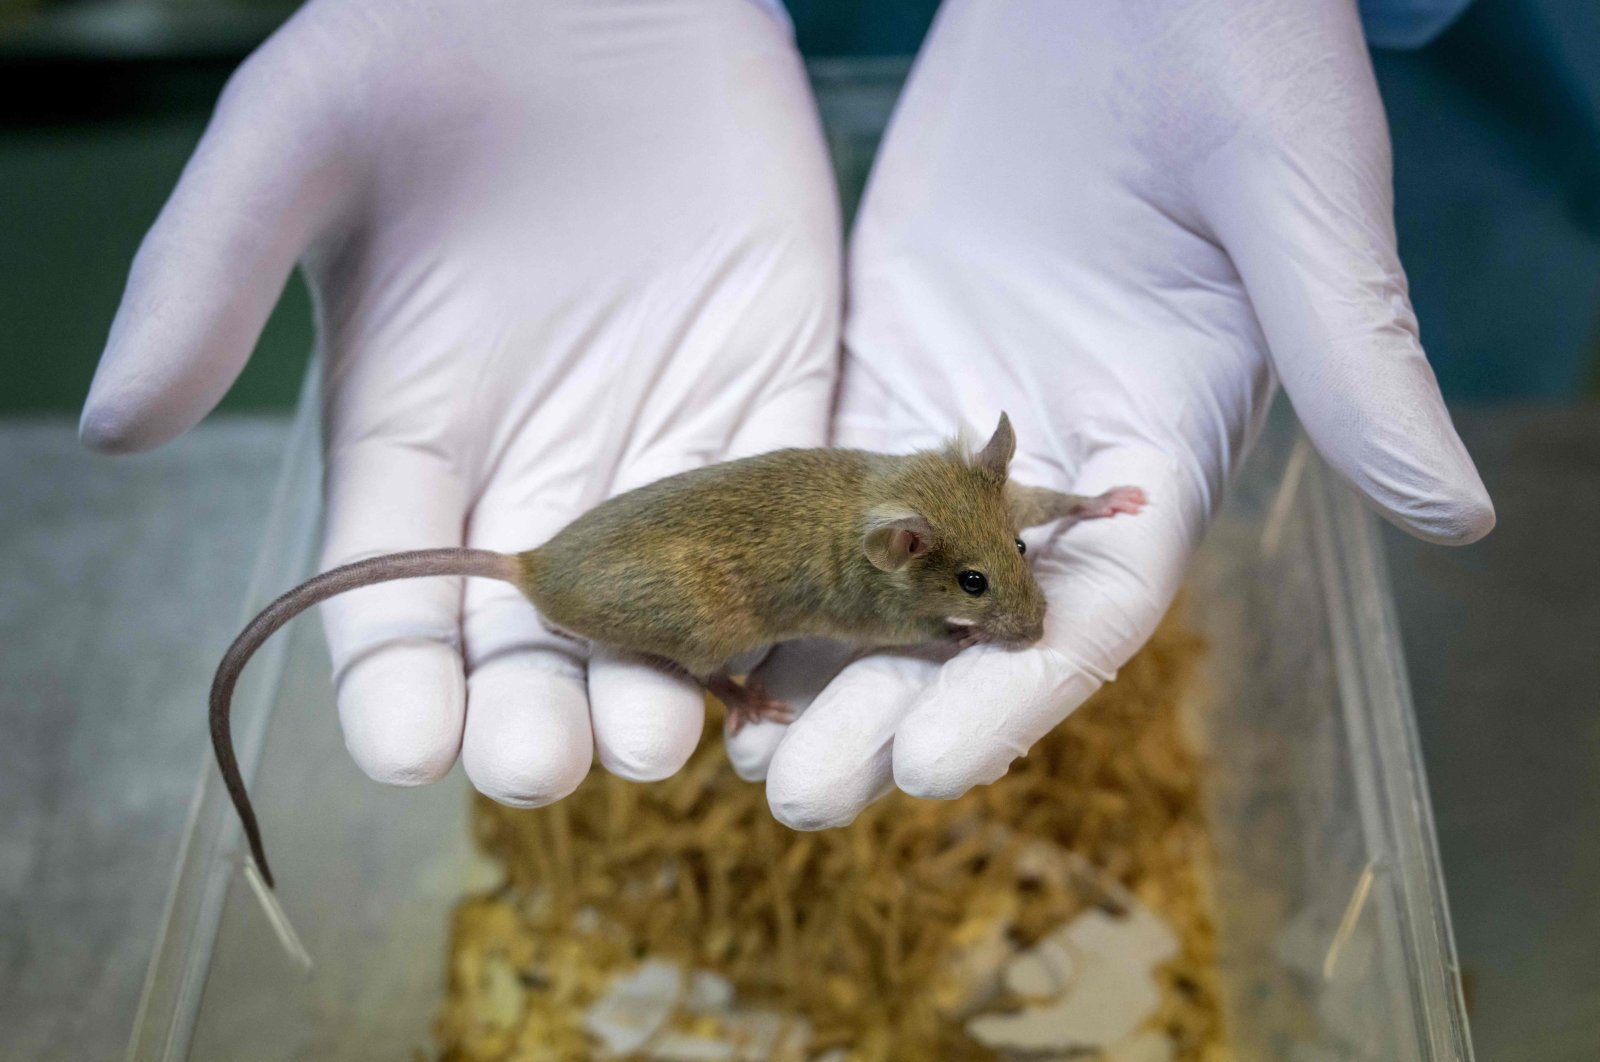 A technician holds a laboratory rat at the University of Geneva, Switzerland, Jan. 18, 2022. (AFP Photo)